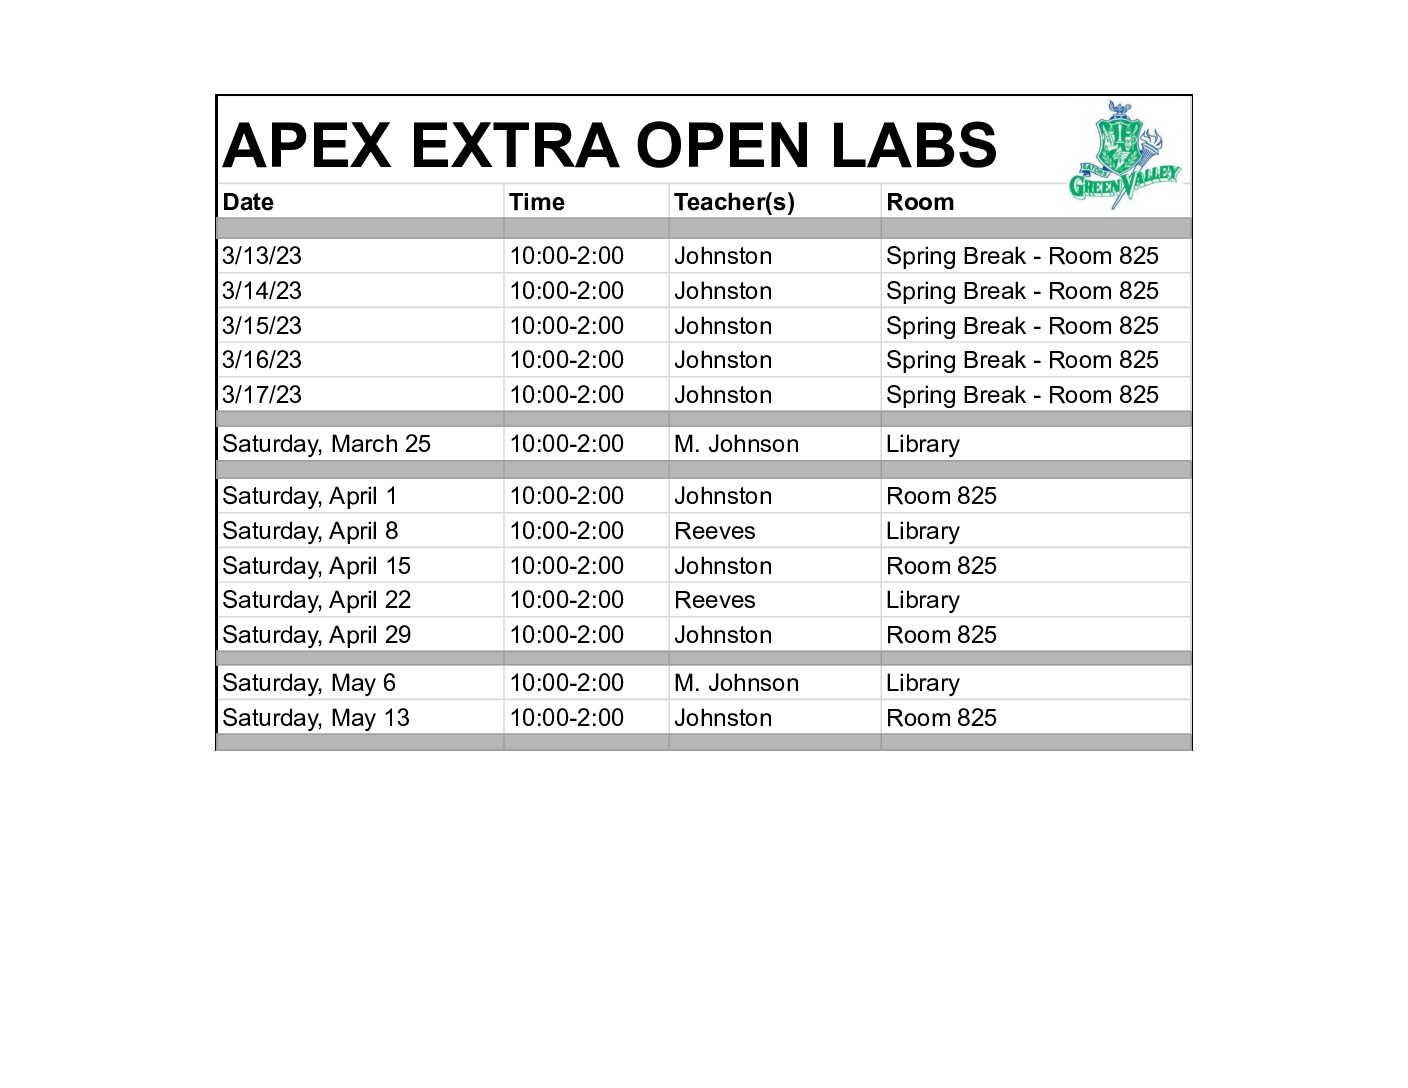 APEX Extra Open Labs